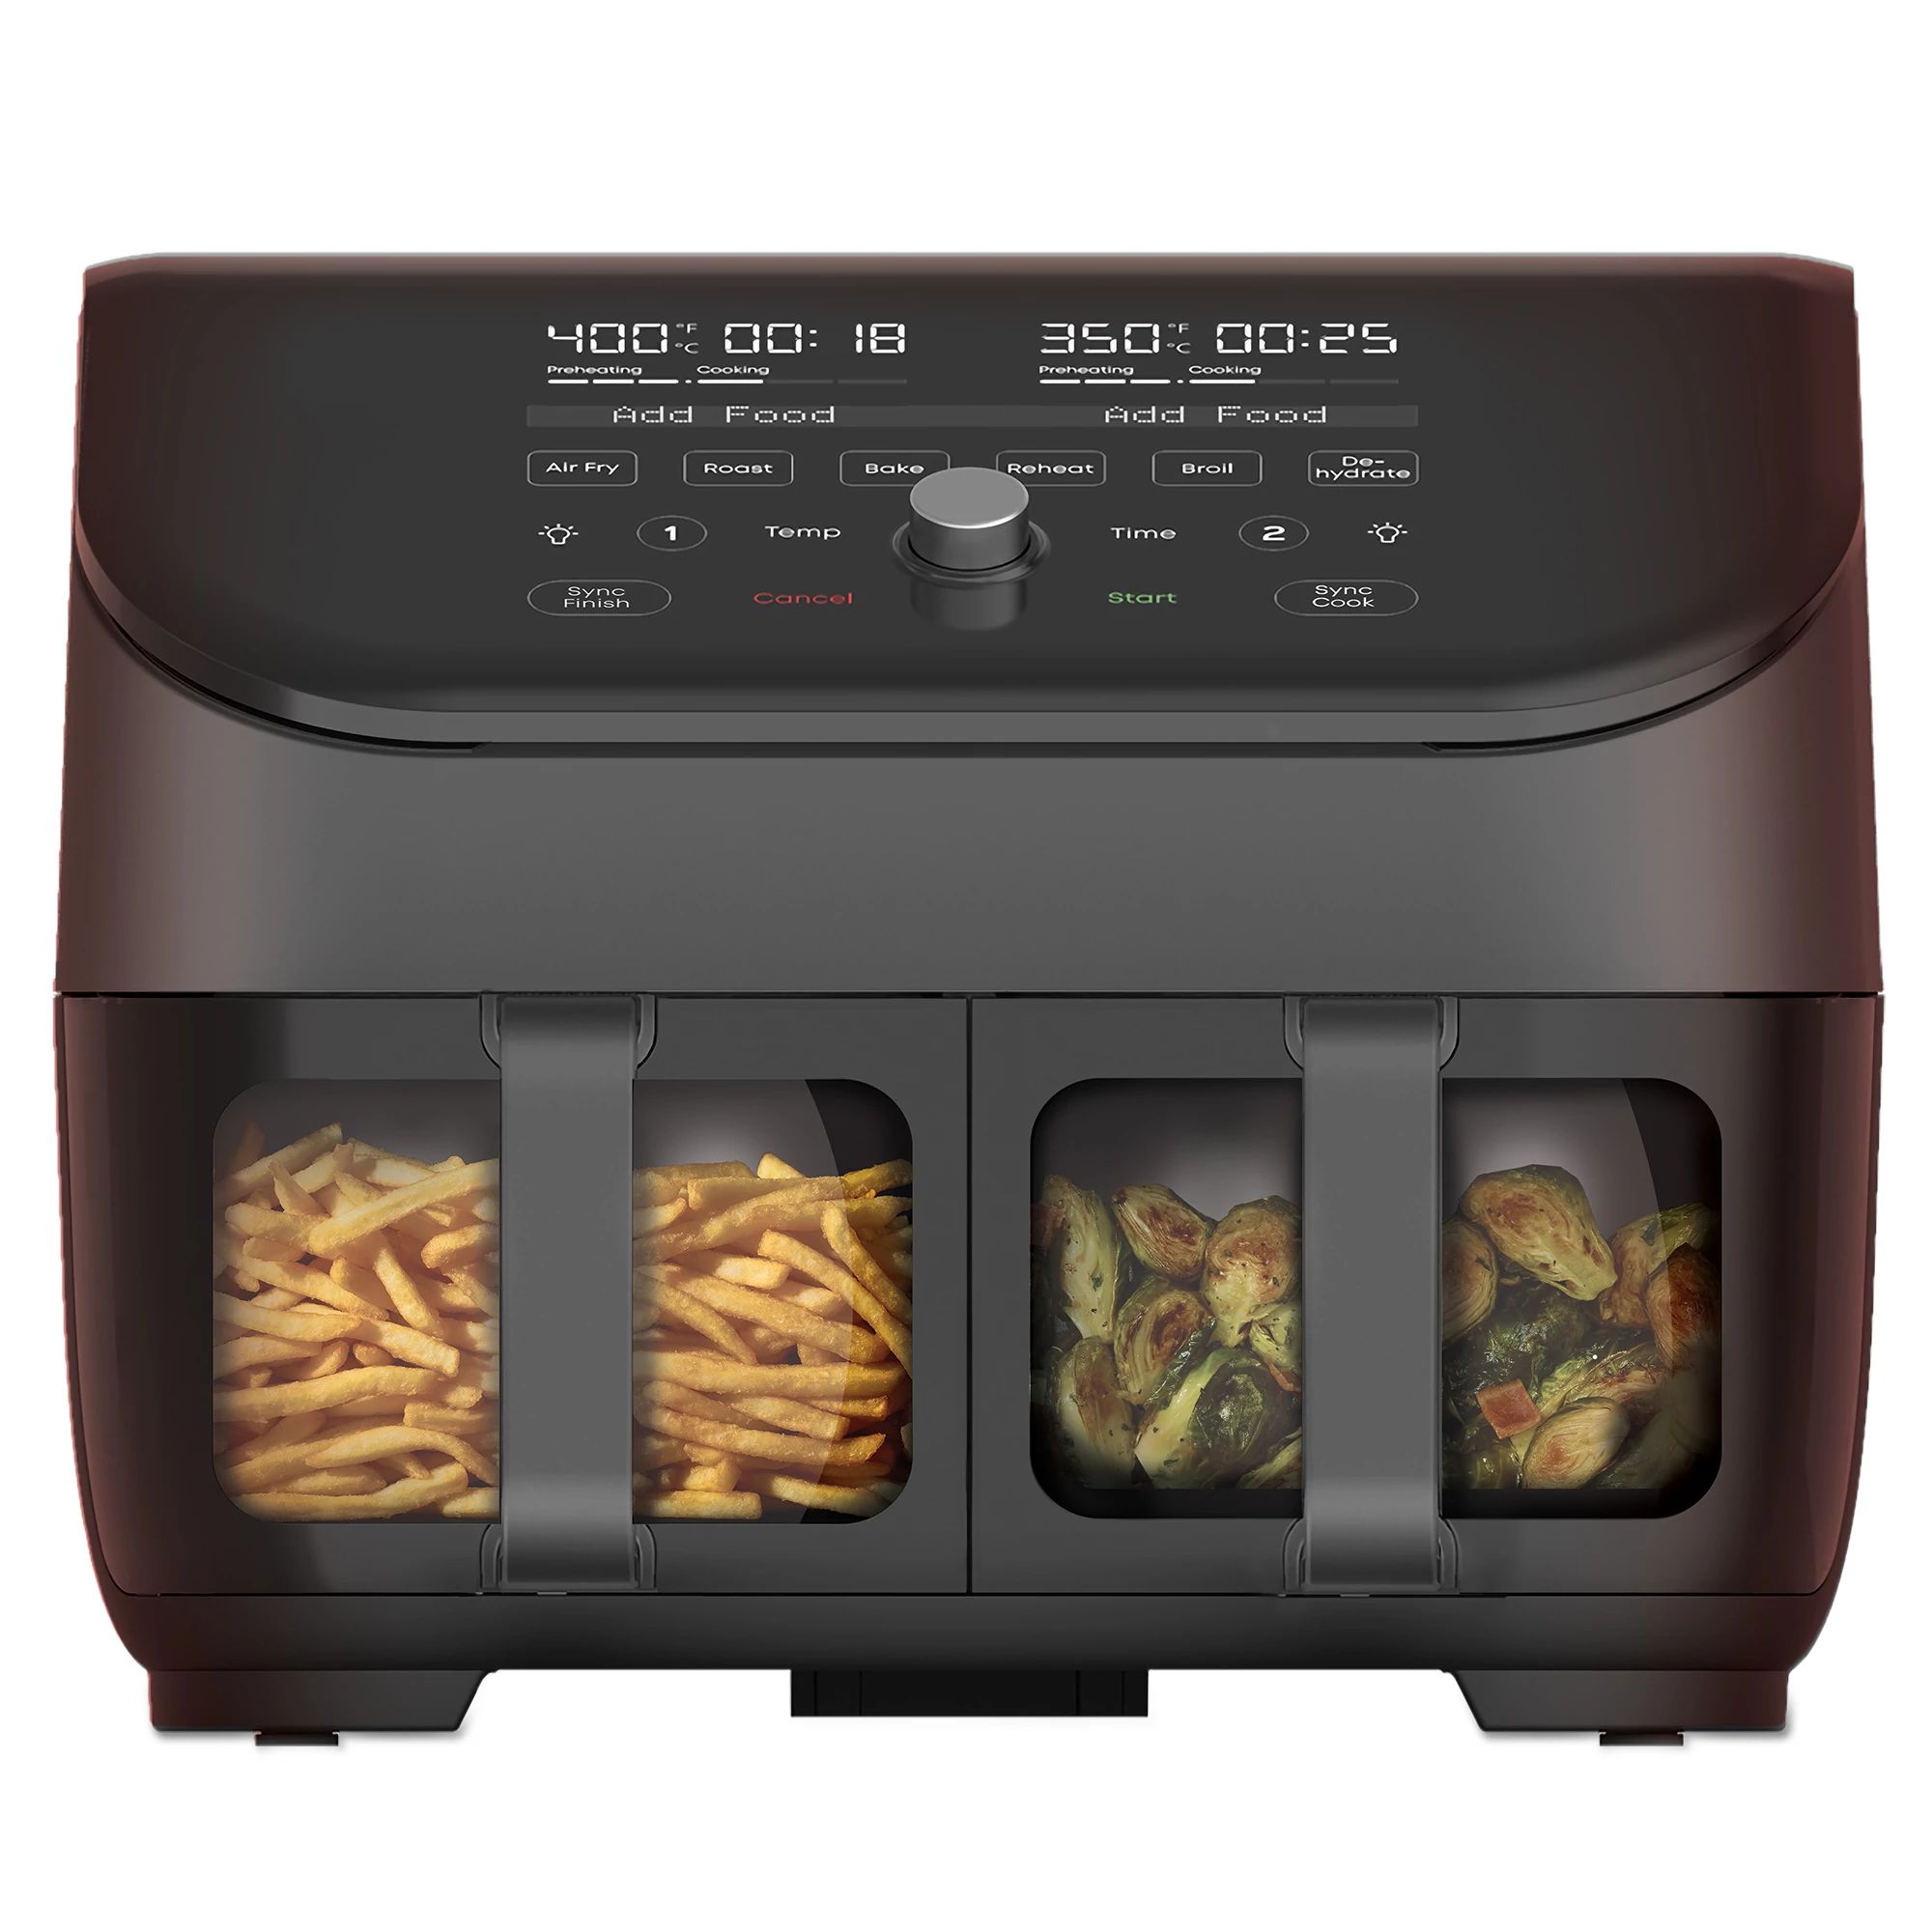  Instant Pot Vortex Plus 6-in-1, 4-quart Air Fryer Oven $59.95